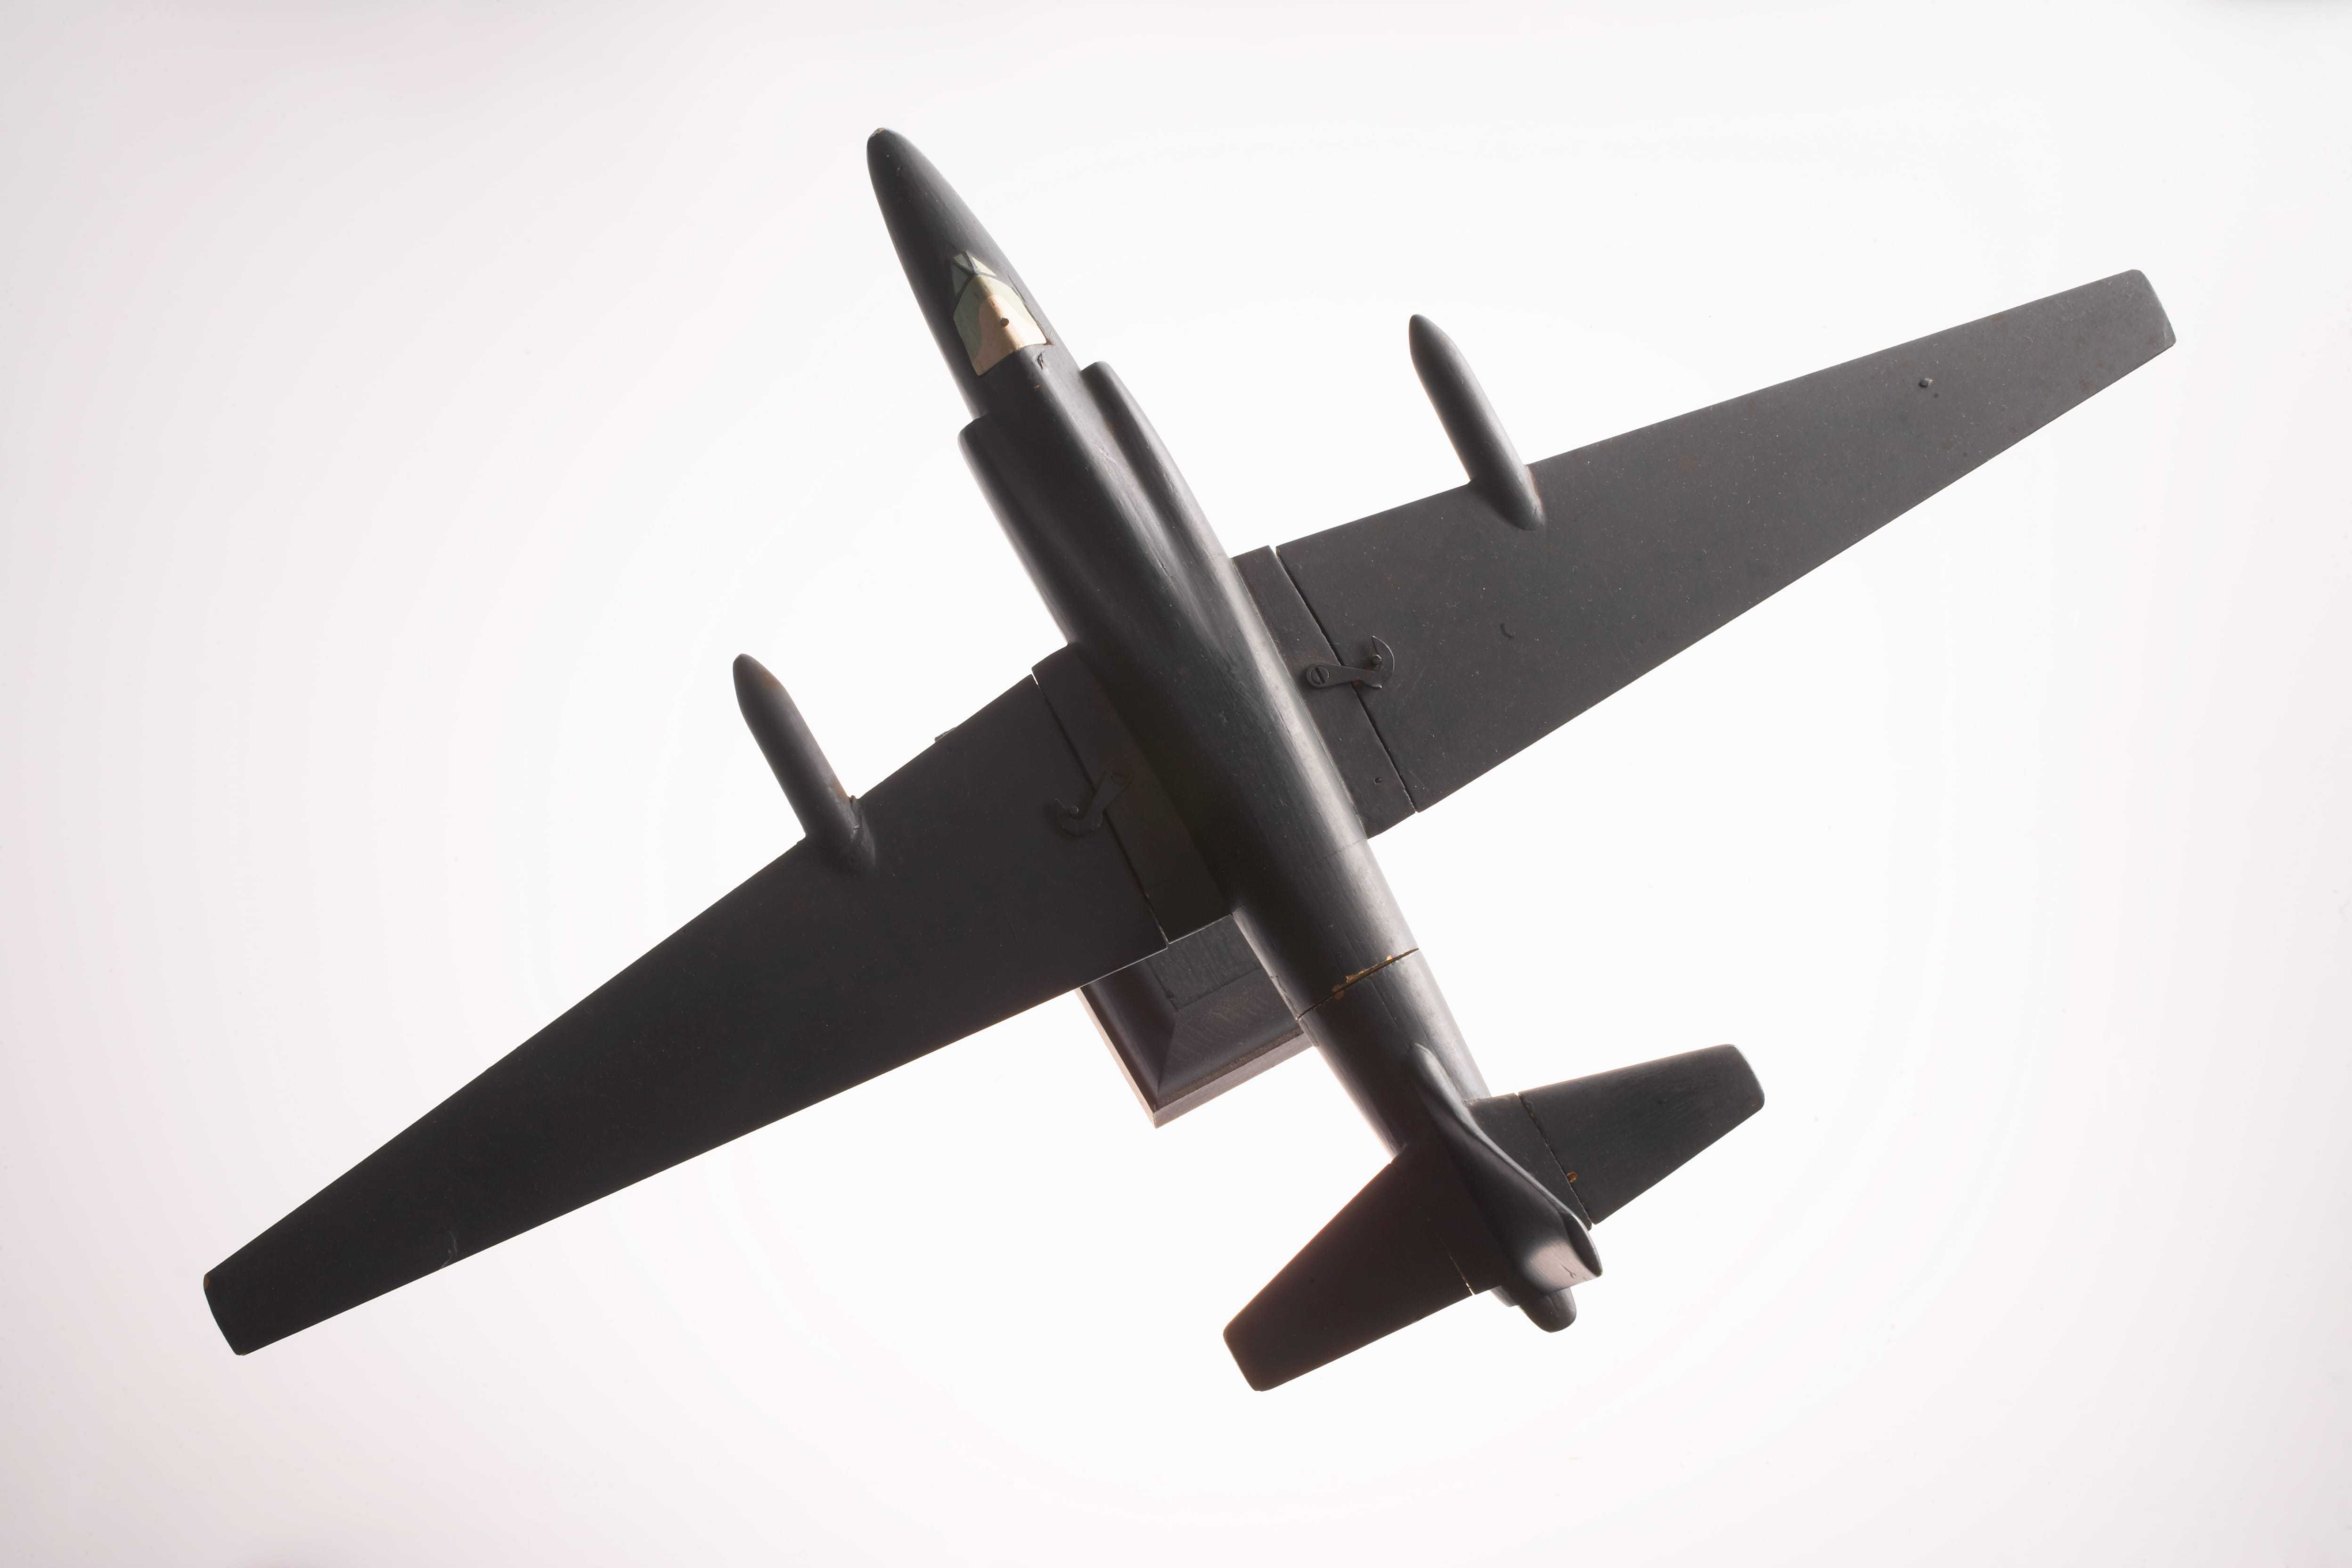 A CIA airplane replica